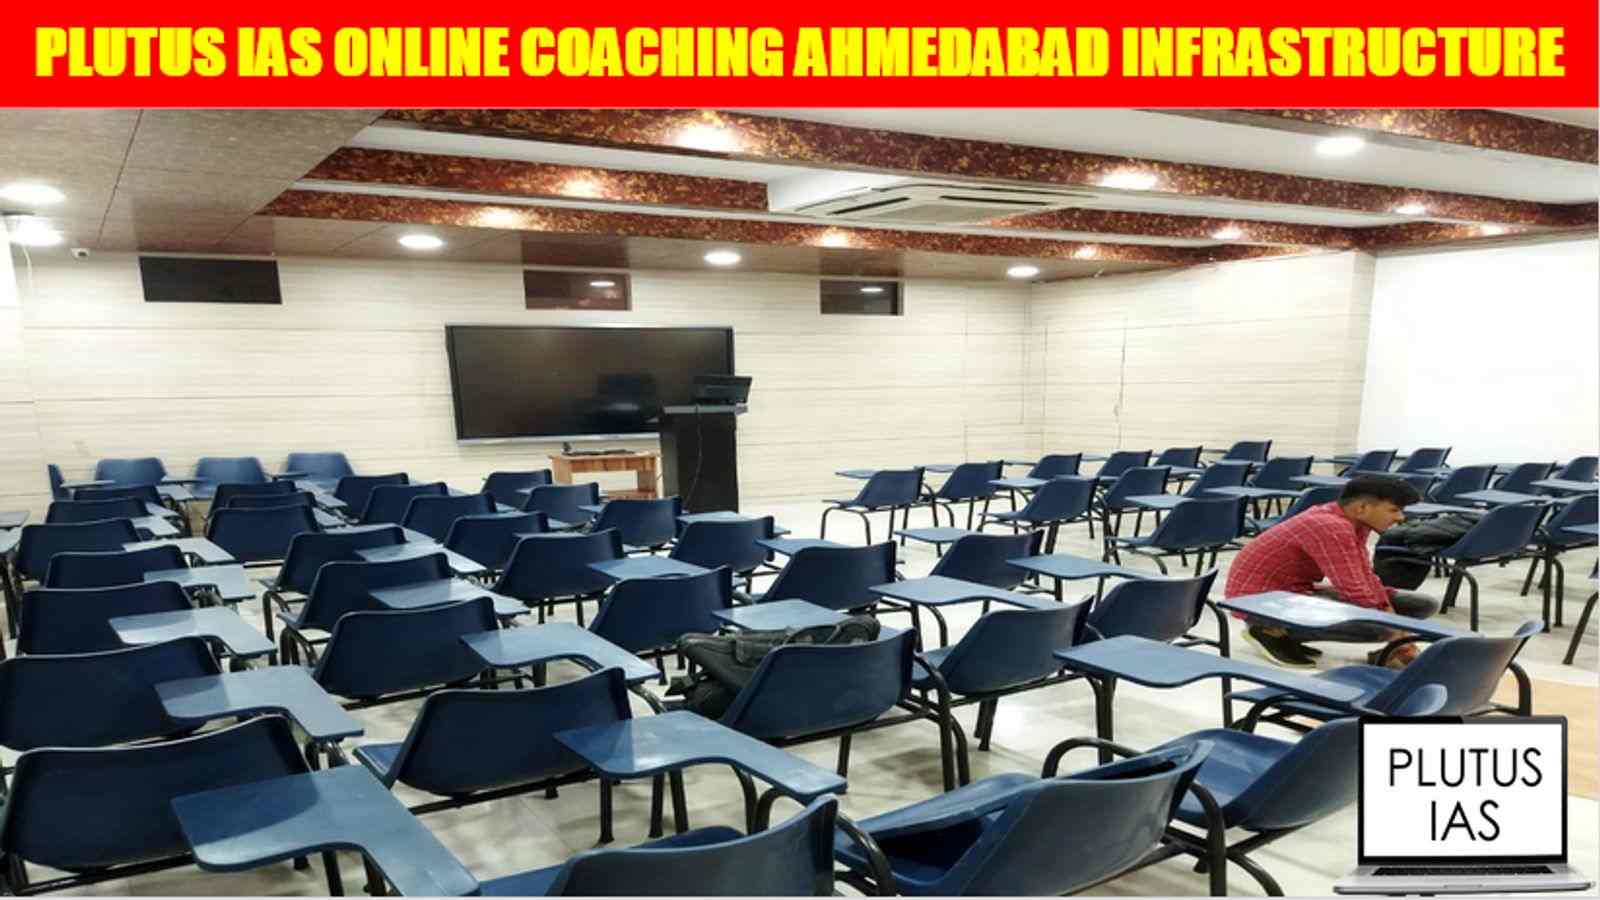 Plutus IAS Online Coaching Ahmedabad Infrastructure